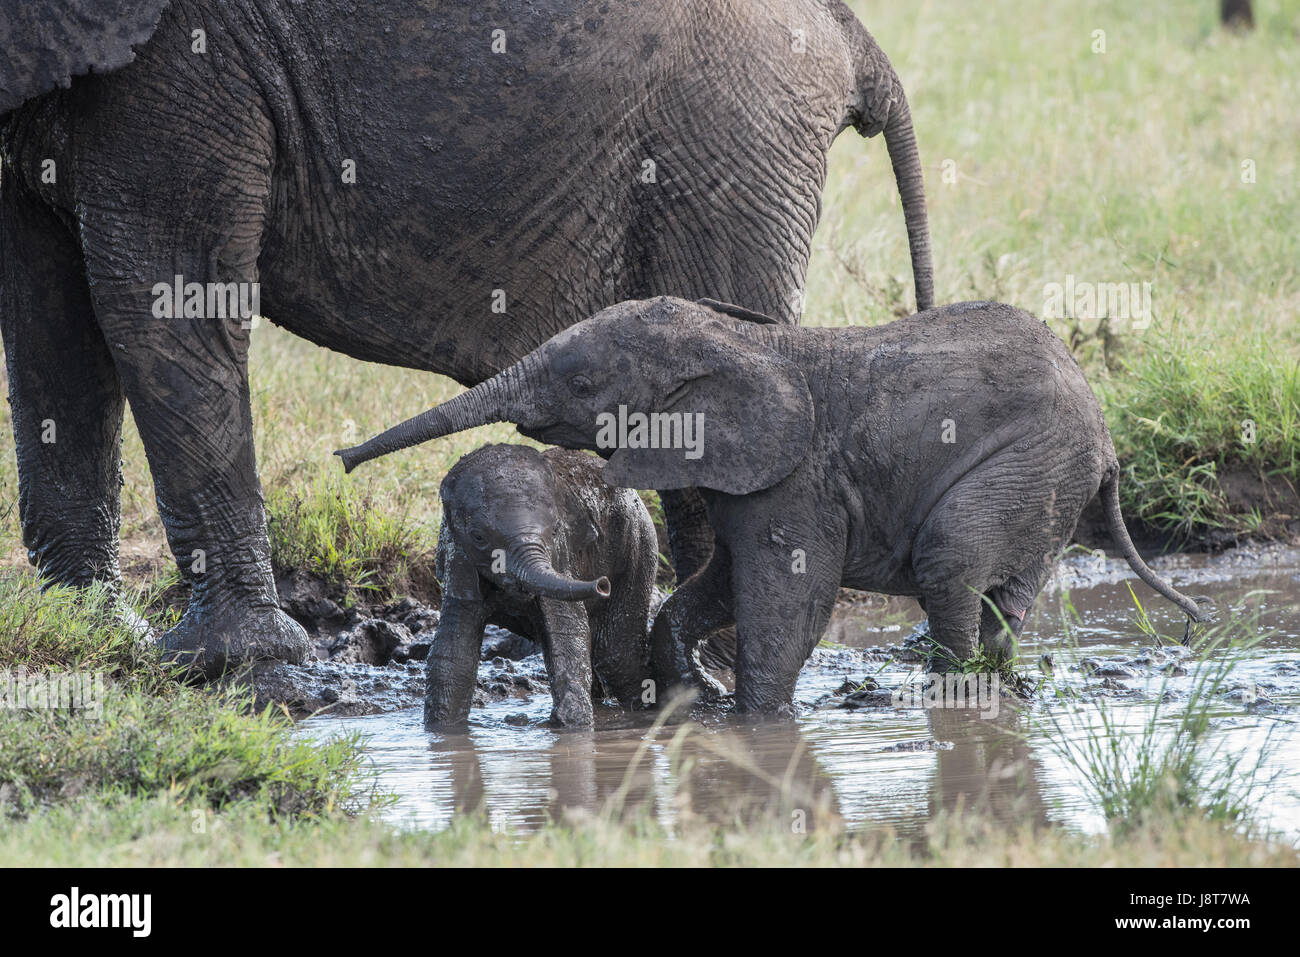 Baby elephants playing in water, Tanzania Stock Photo